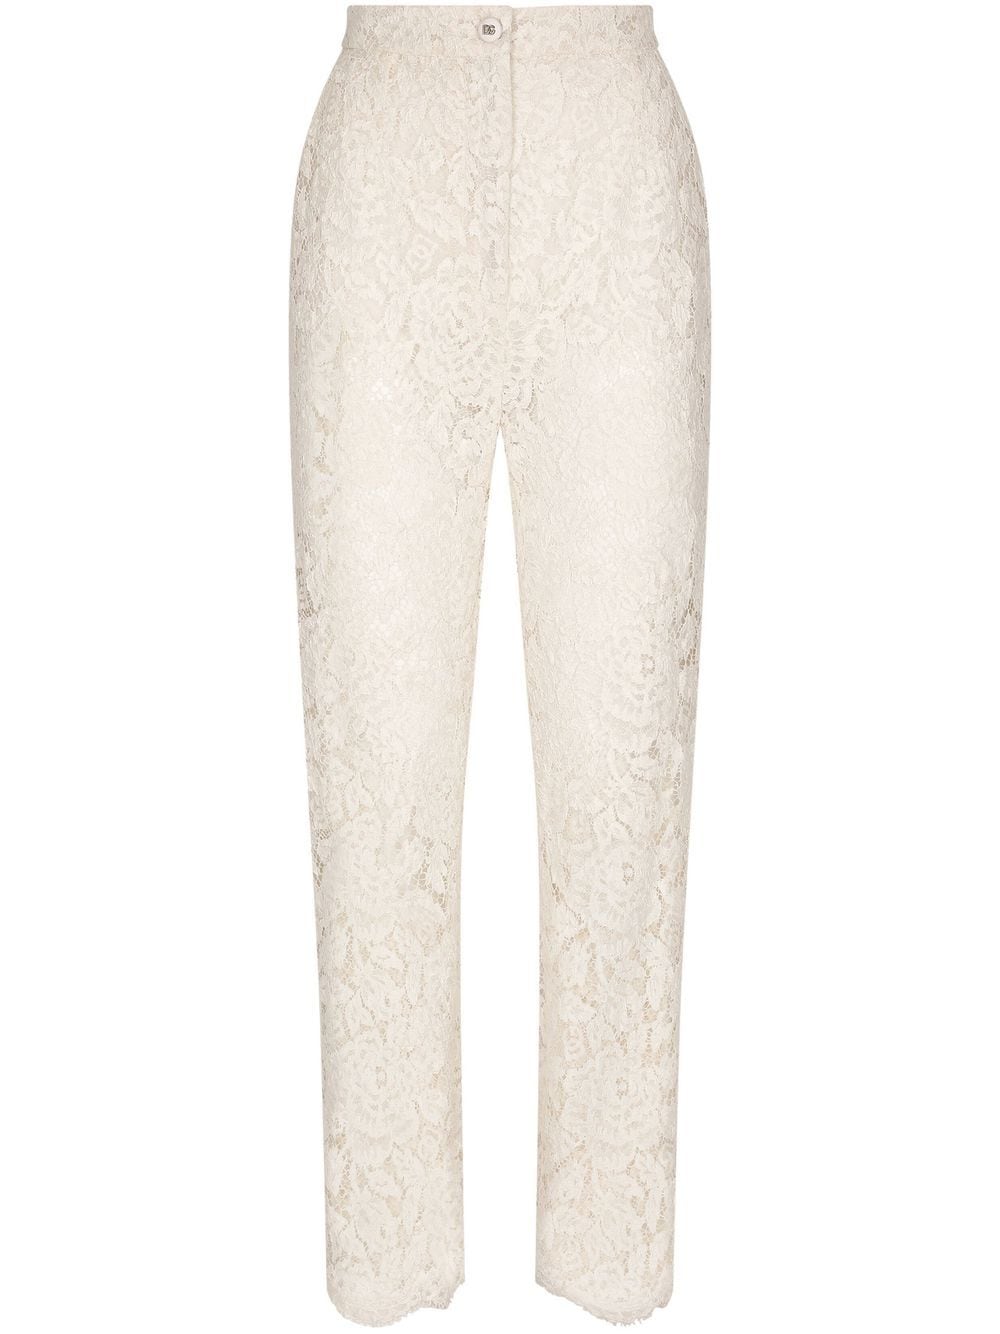 Dolce & Gabbana floral-lace trousers - White von Dolce & Gabbana